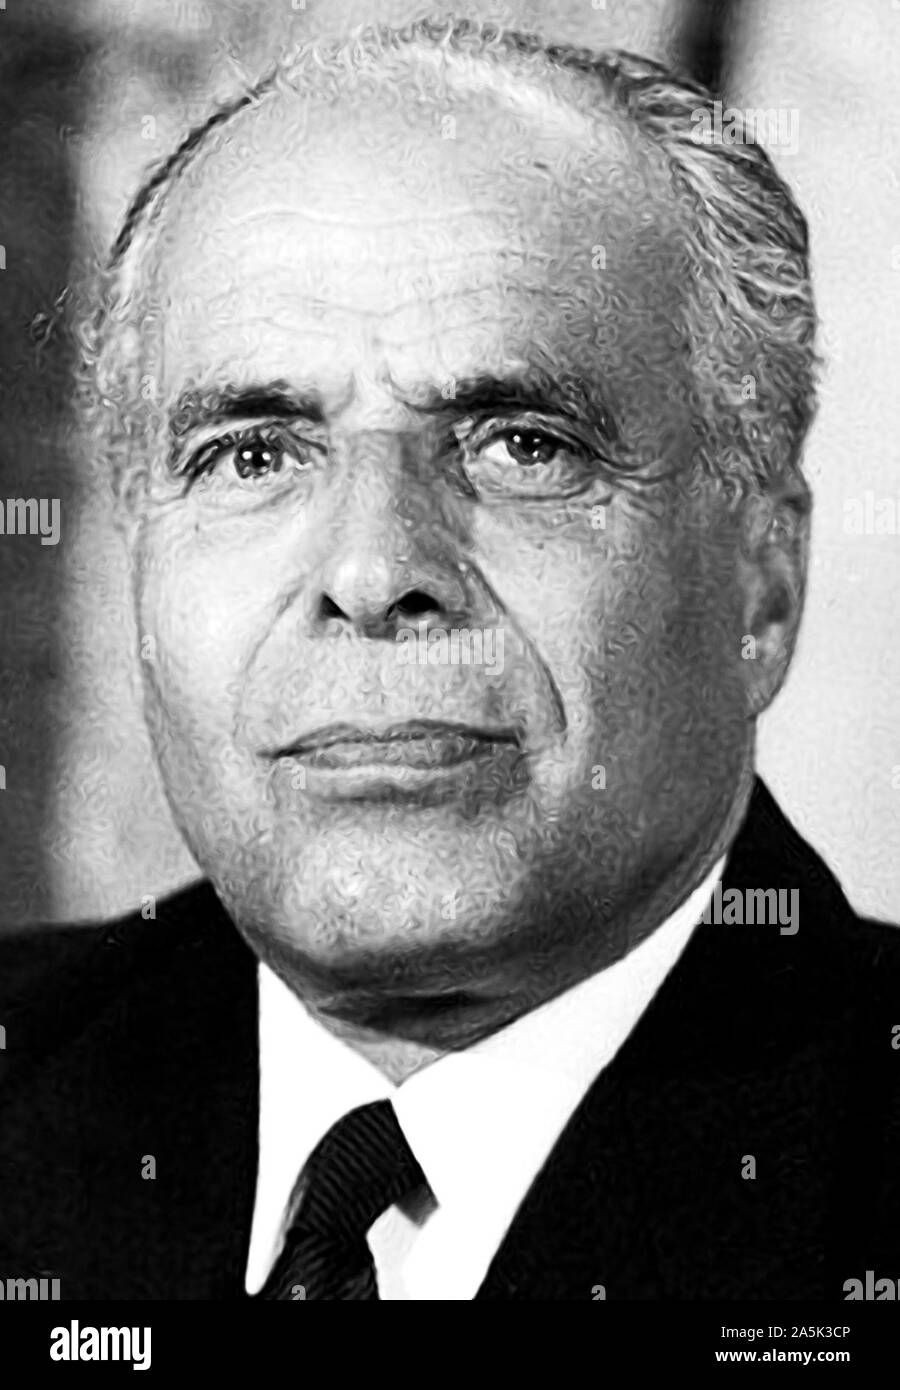 President Habib Bourguiba of Tunisia Portrait / Portrait du président tunisien Habib Bourguiba ca. 1960s Stock Photo